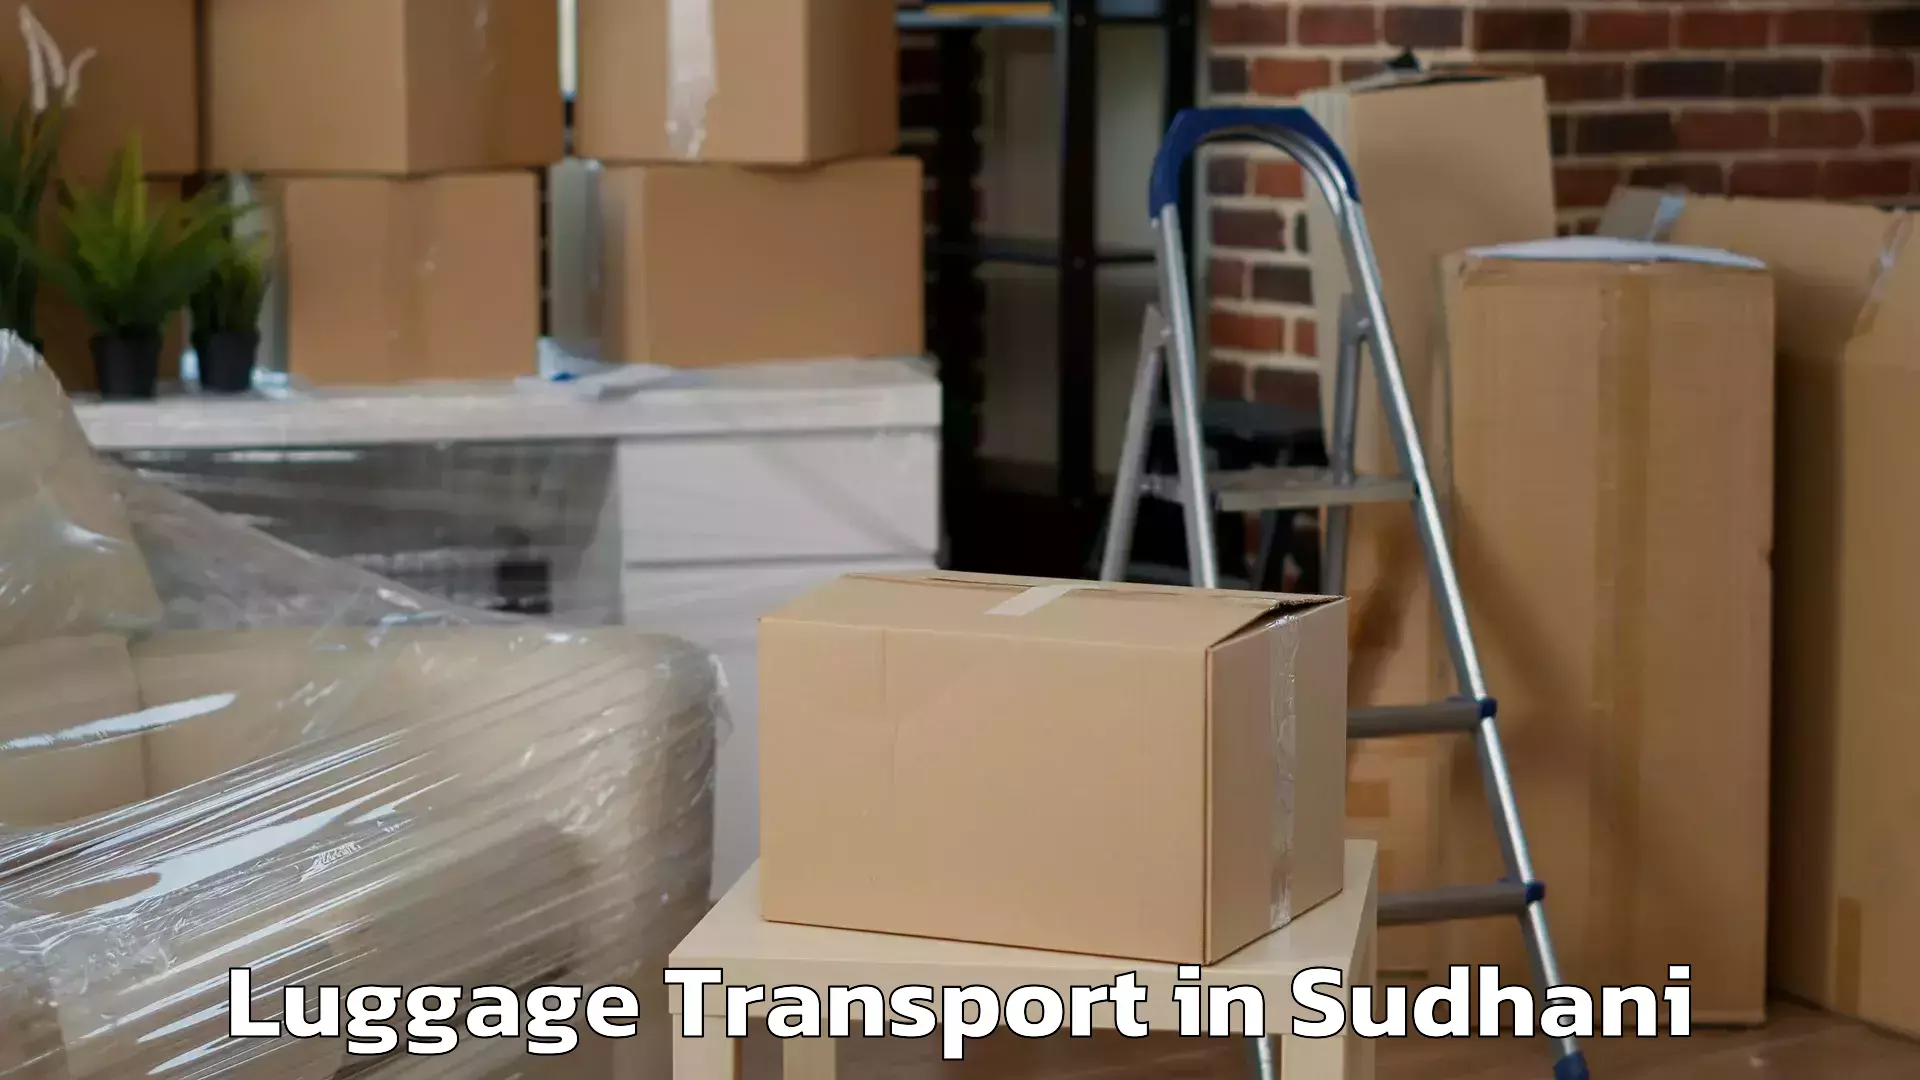 Luggage shipment processing in Sudhani